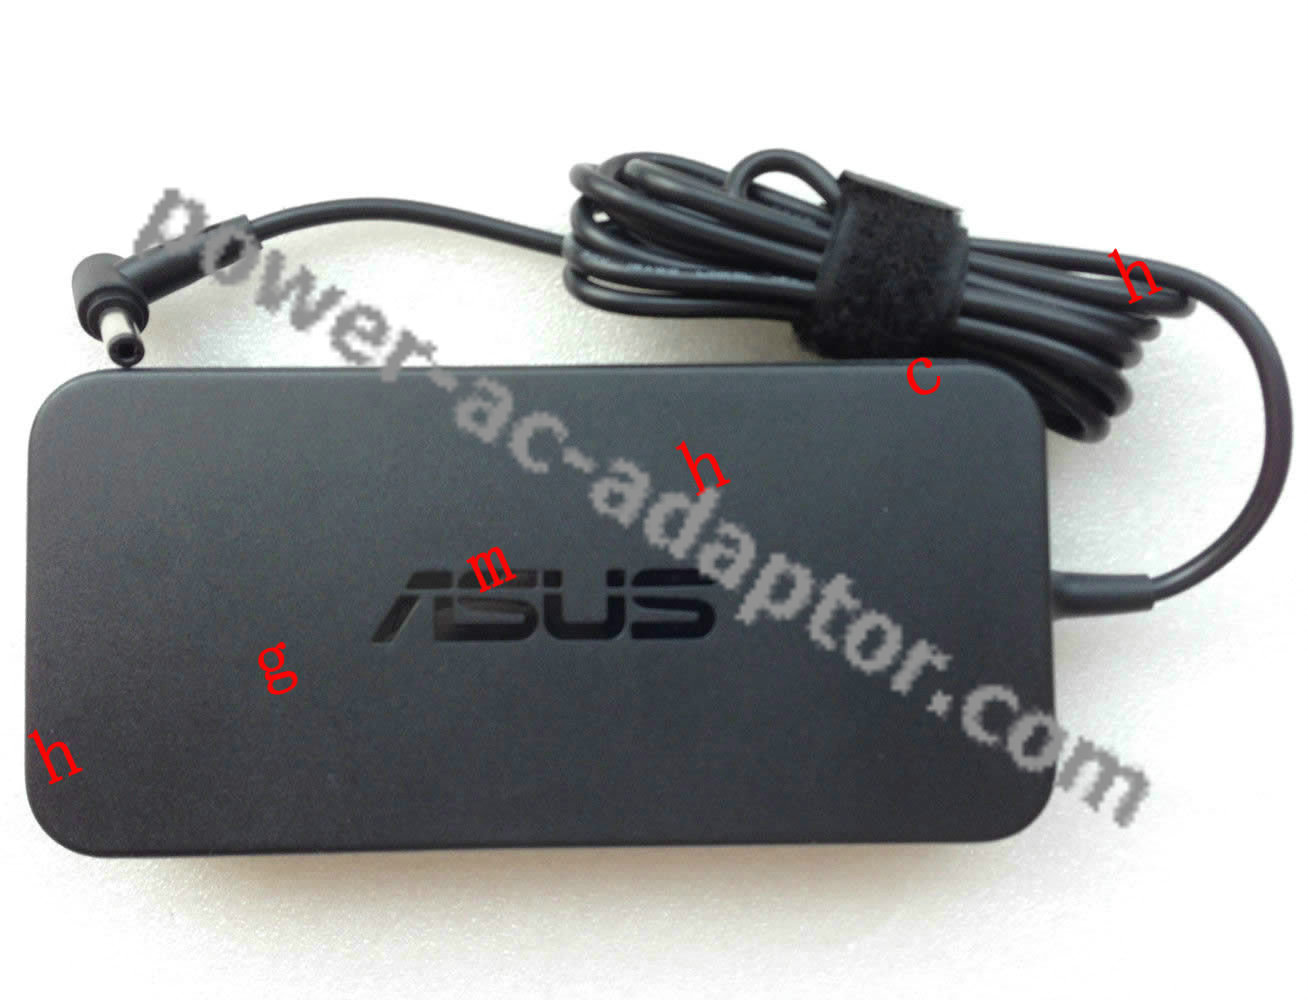 Genuine OEM Asus 120W Slim G60Vx T9600 Gaming AC Adapter for